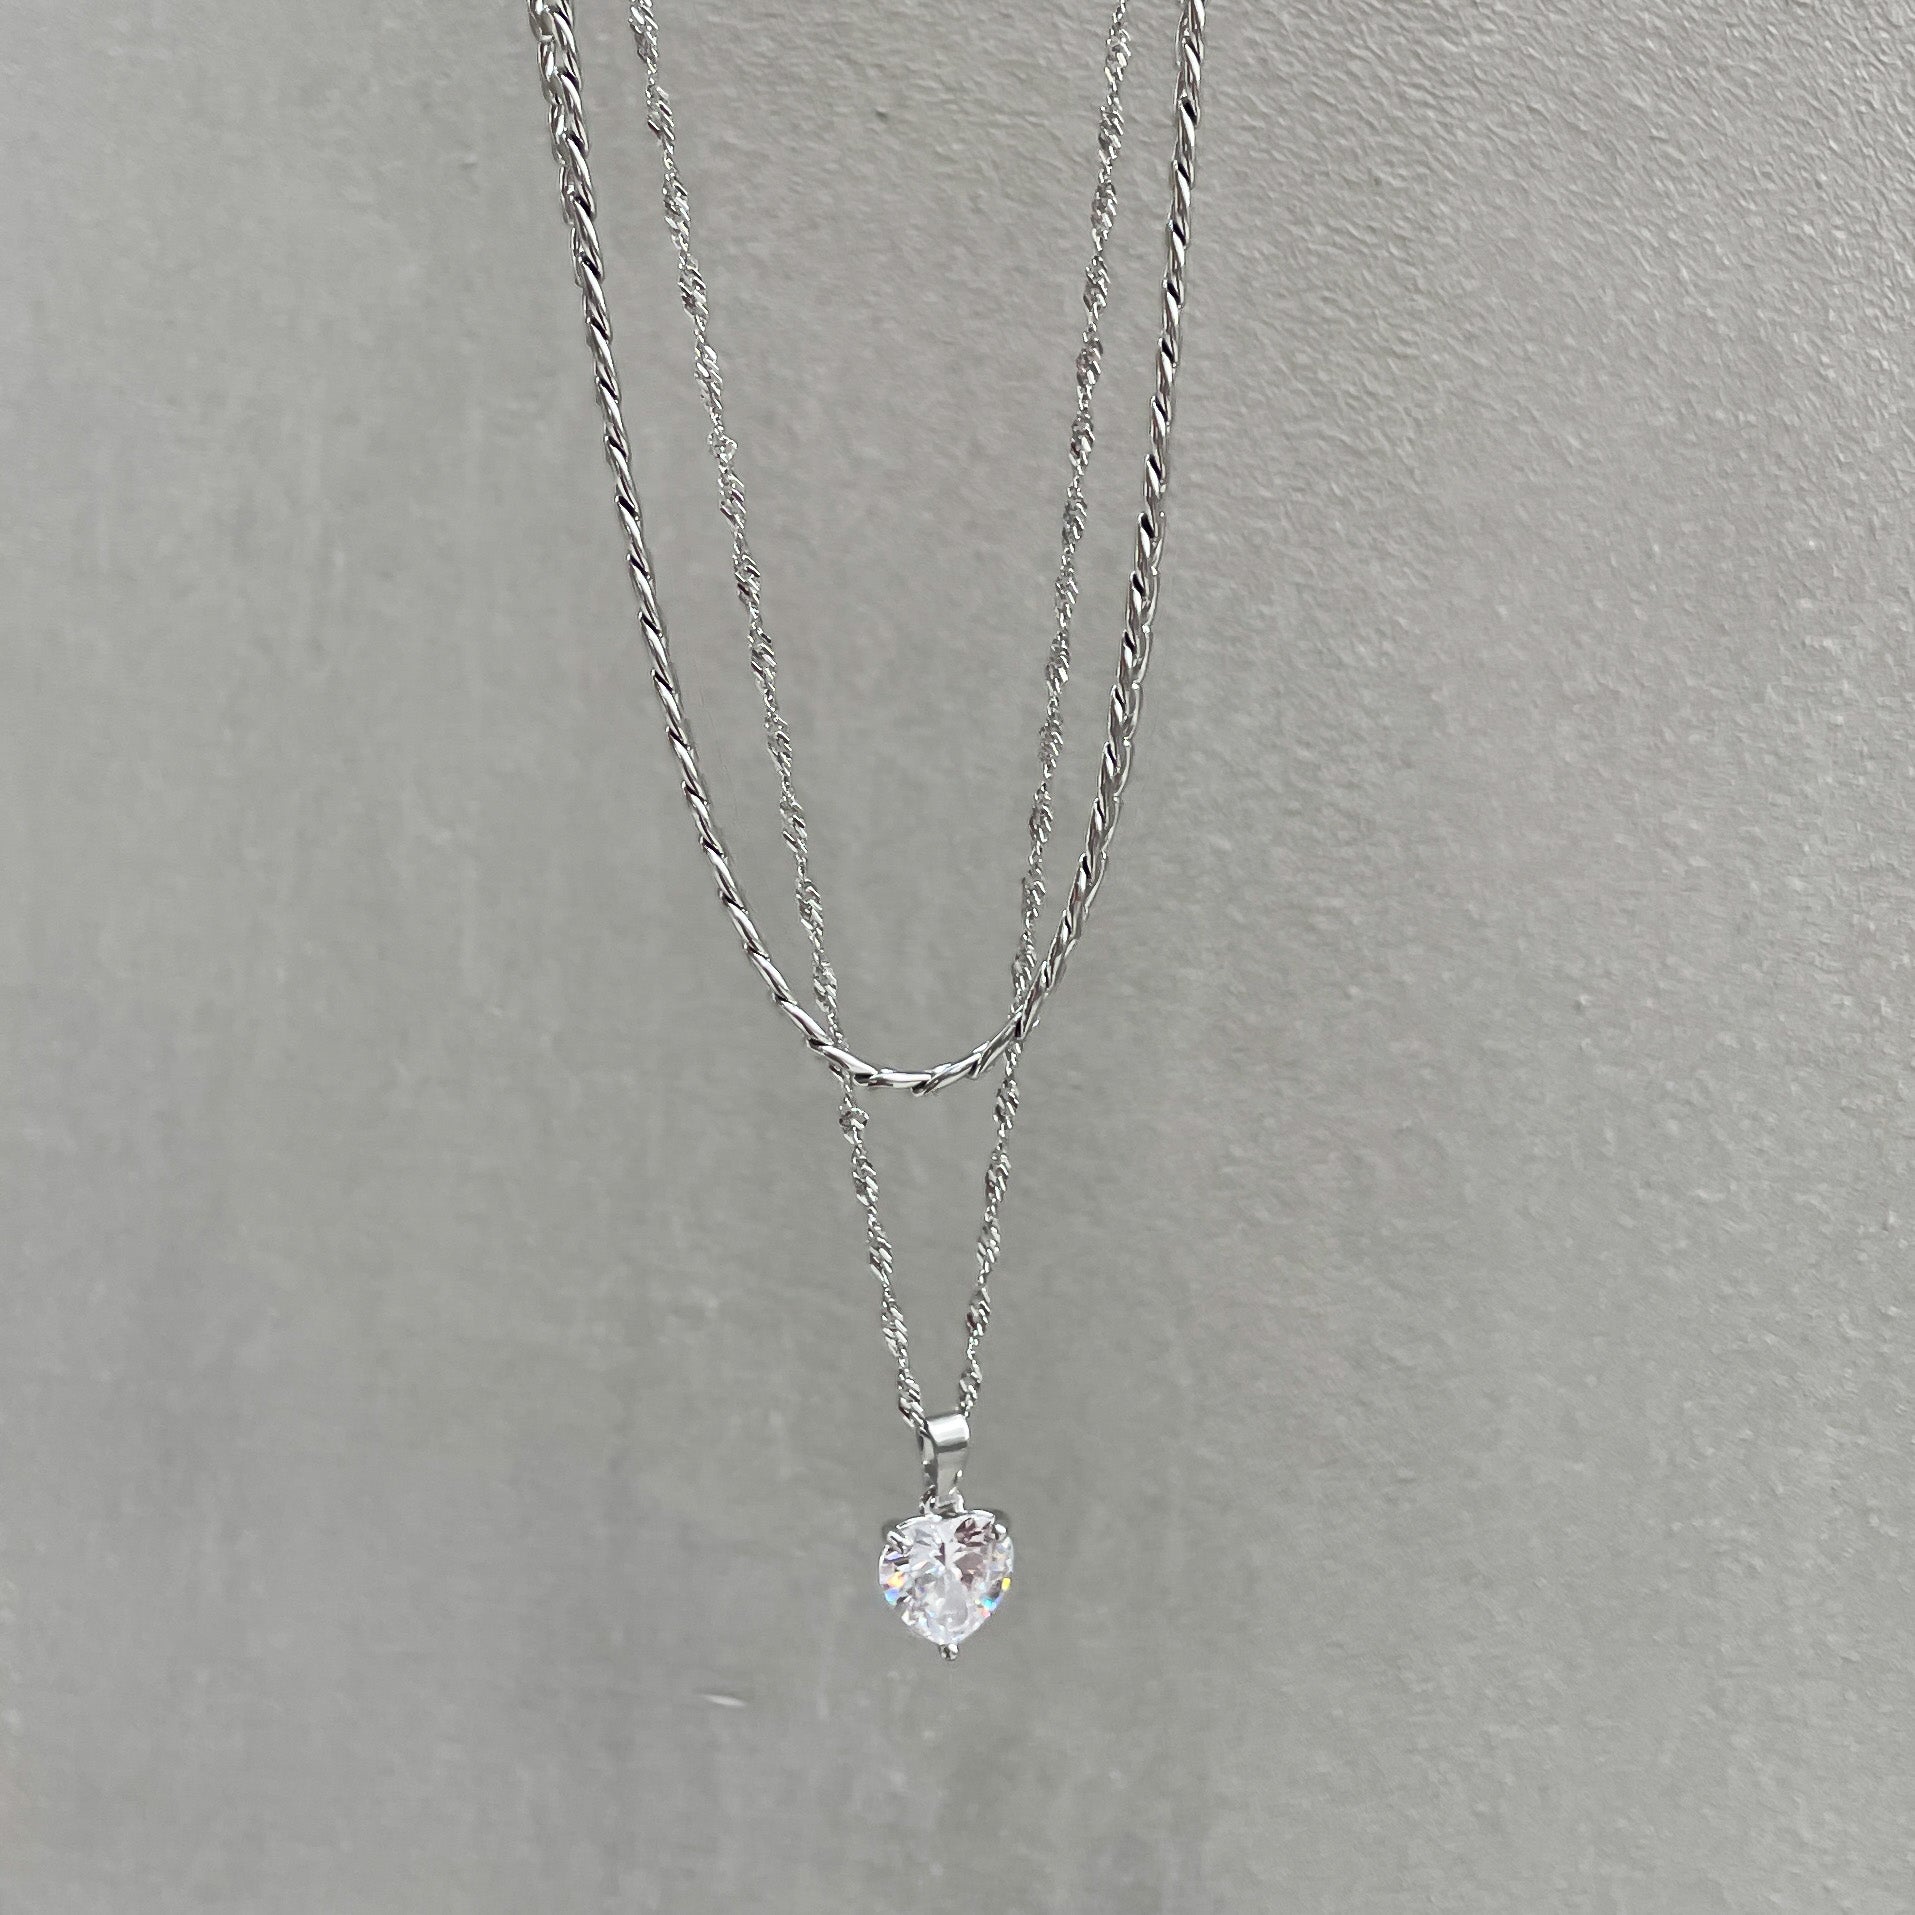 Silver zirconia necklace(2セット) - 𝐇𝐨𝐧𝐞𝐲 𝐁𝐮𝐭𝐭𝐞𝐫 𝐍𝐢𝐧𝐞